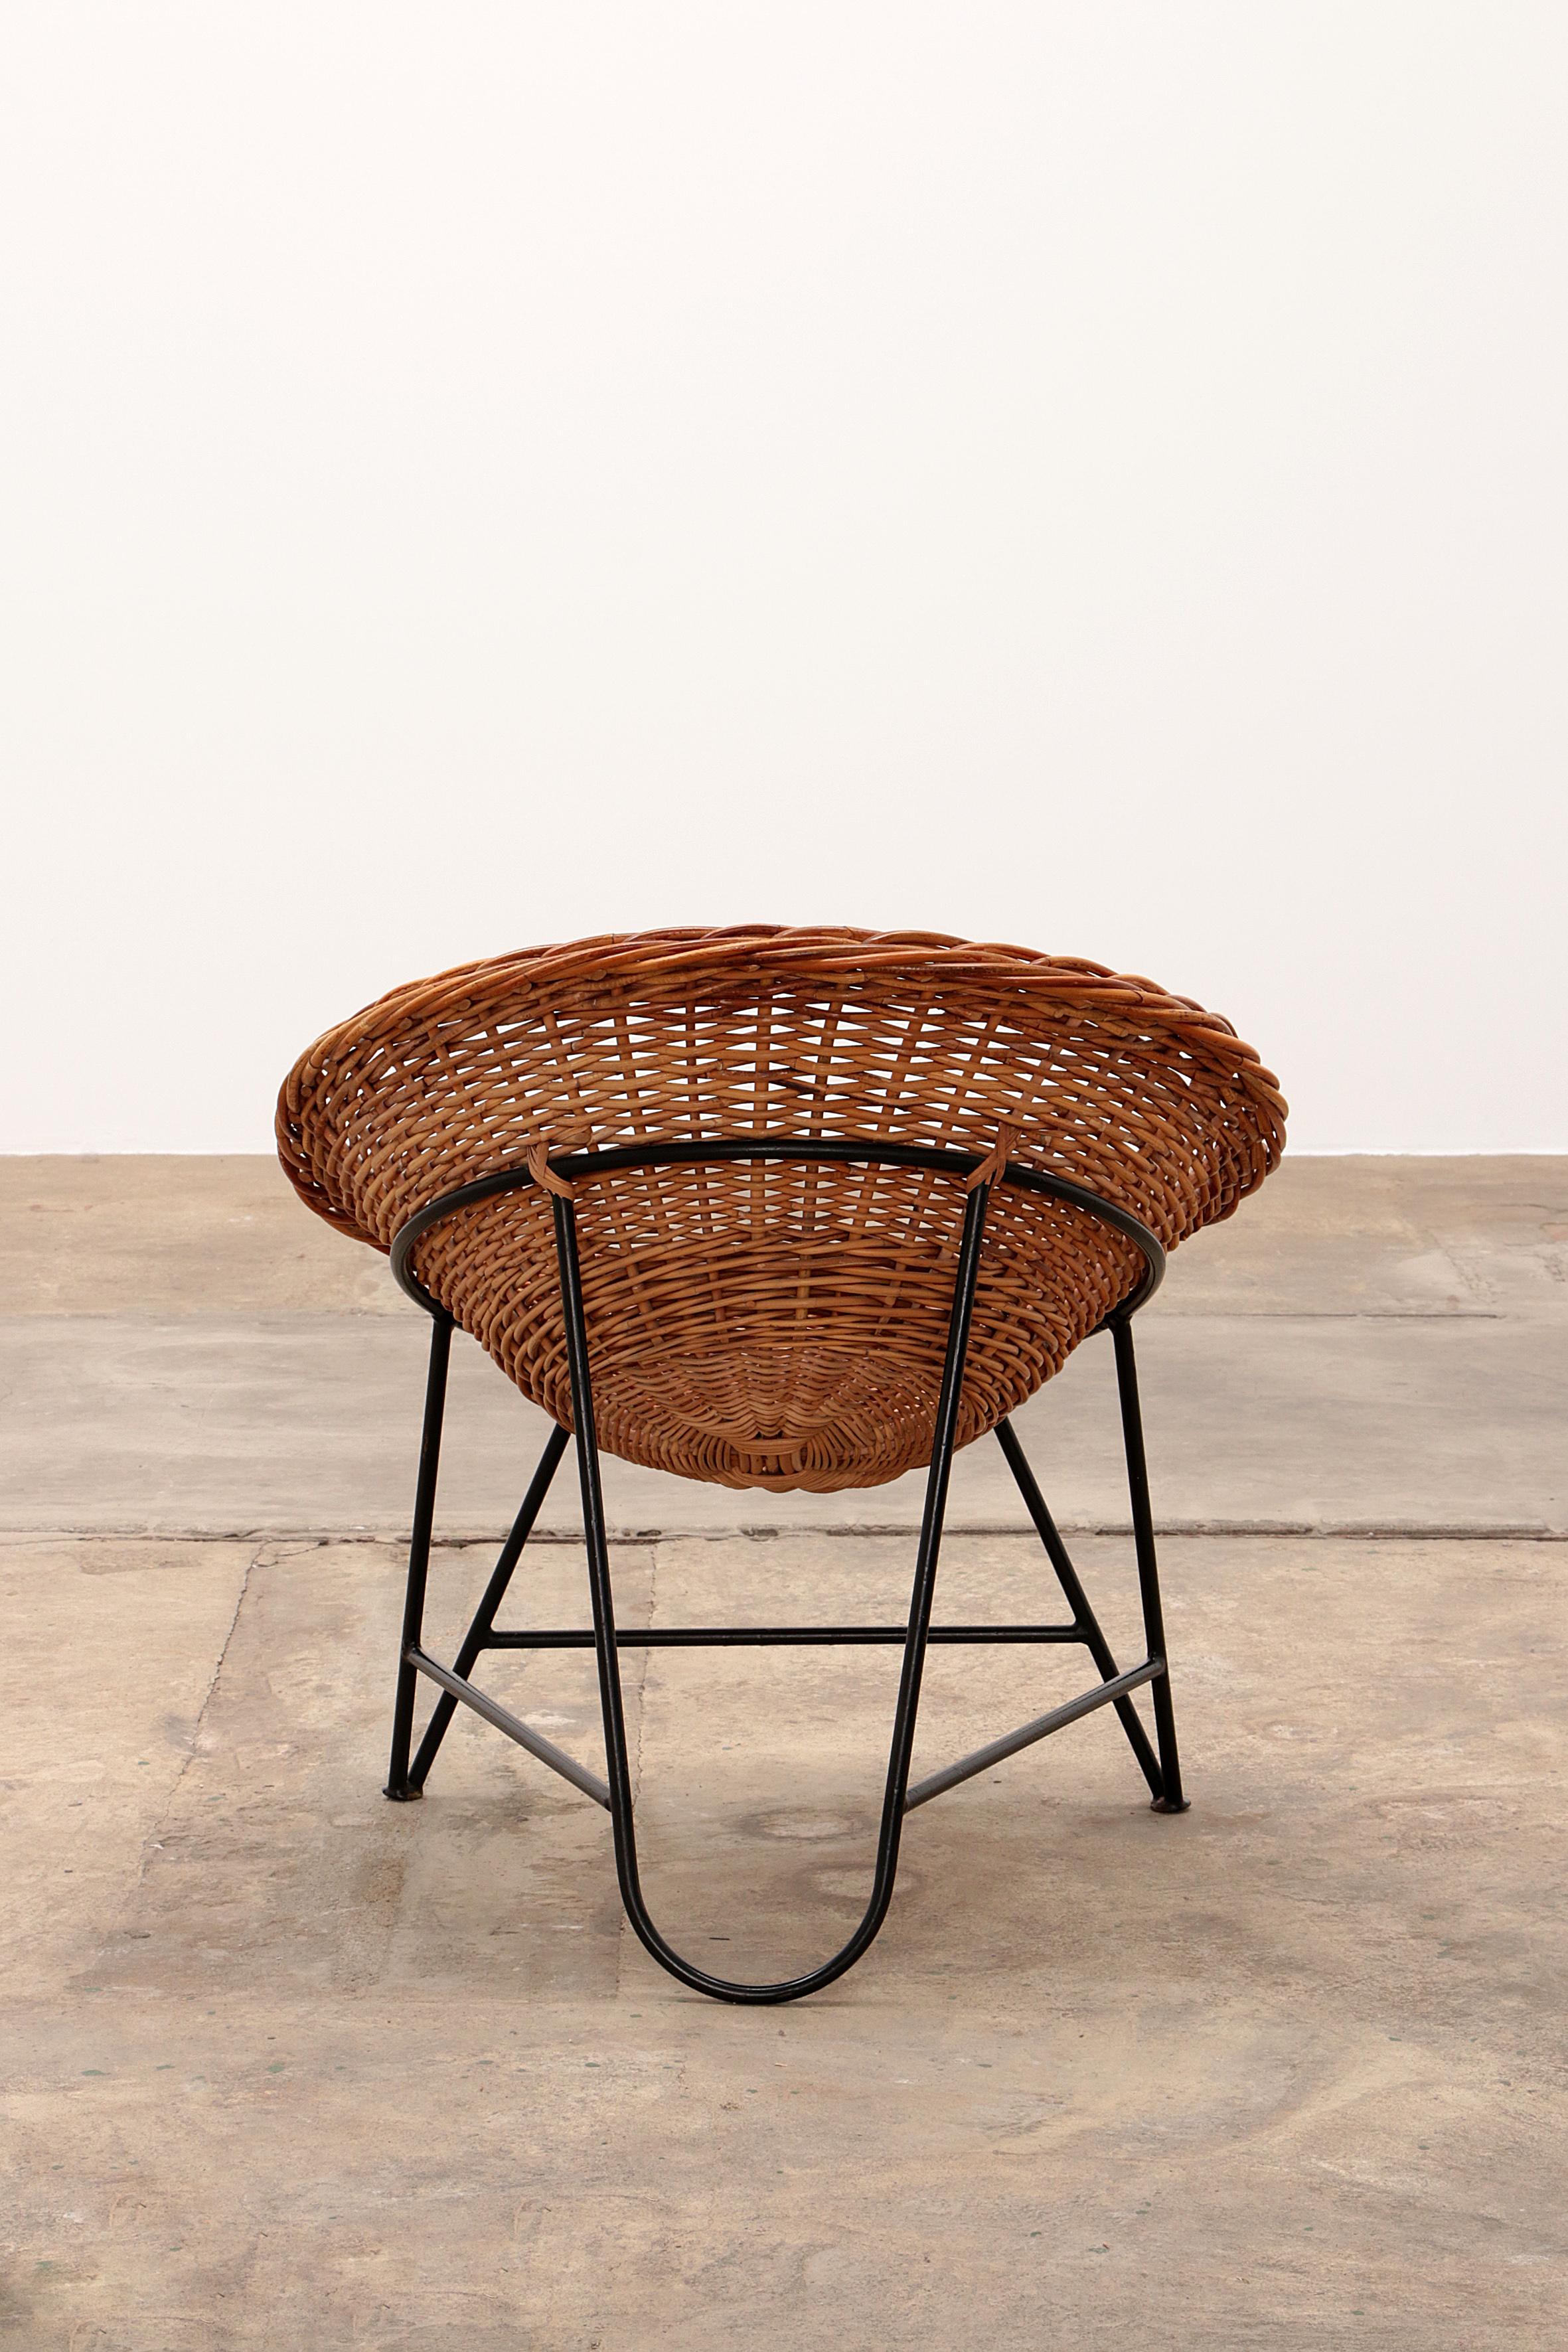 Mid-20th Century Mathieu Matégot Wicker Chair 1950s For Sale